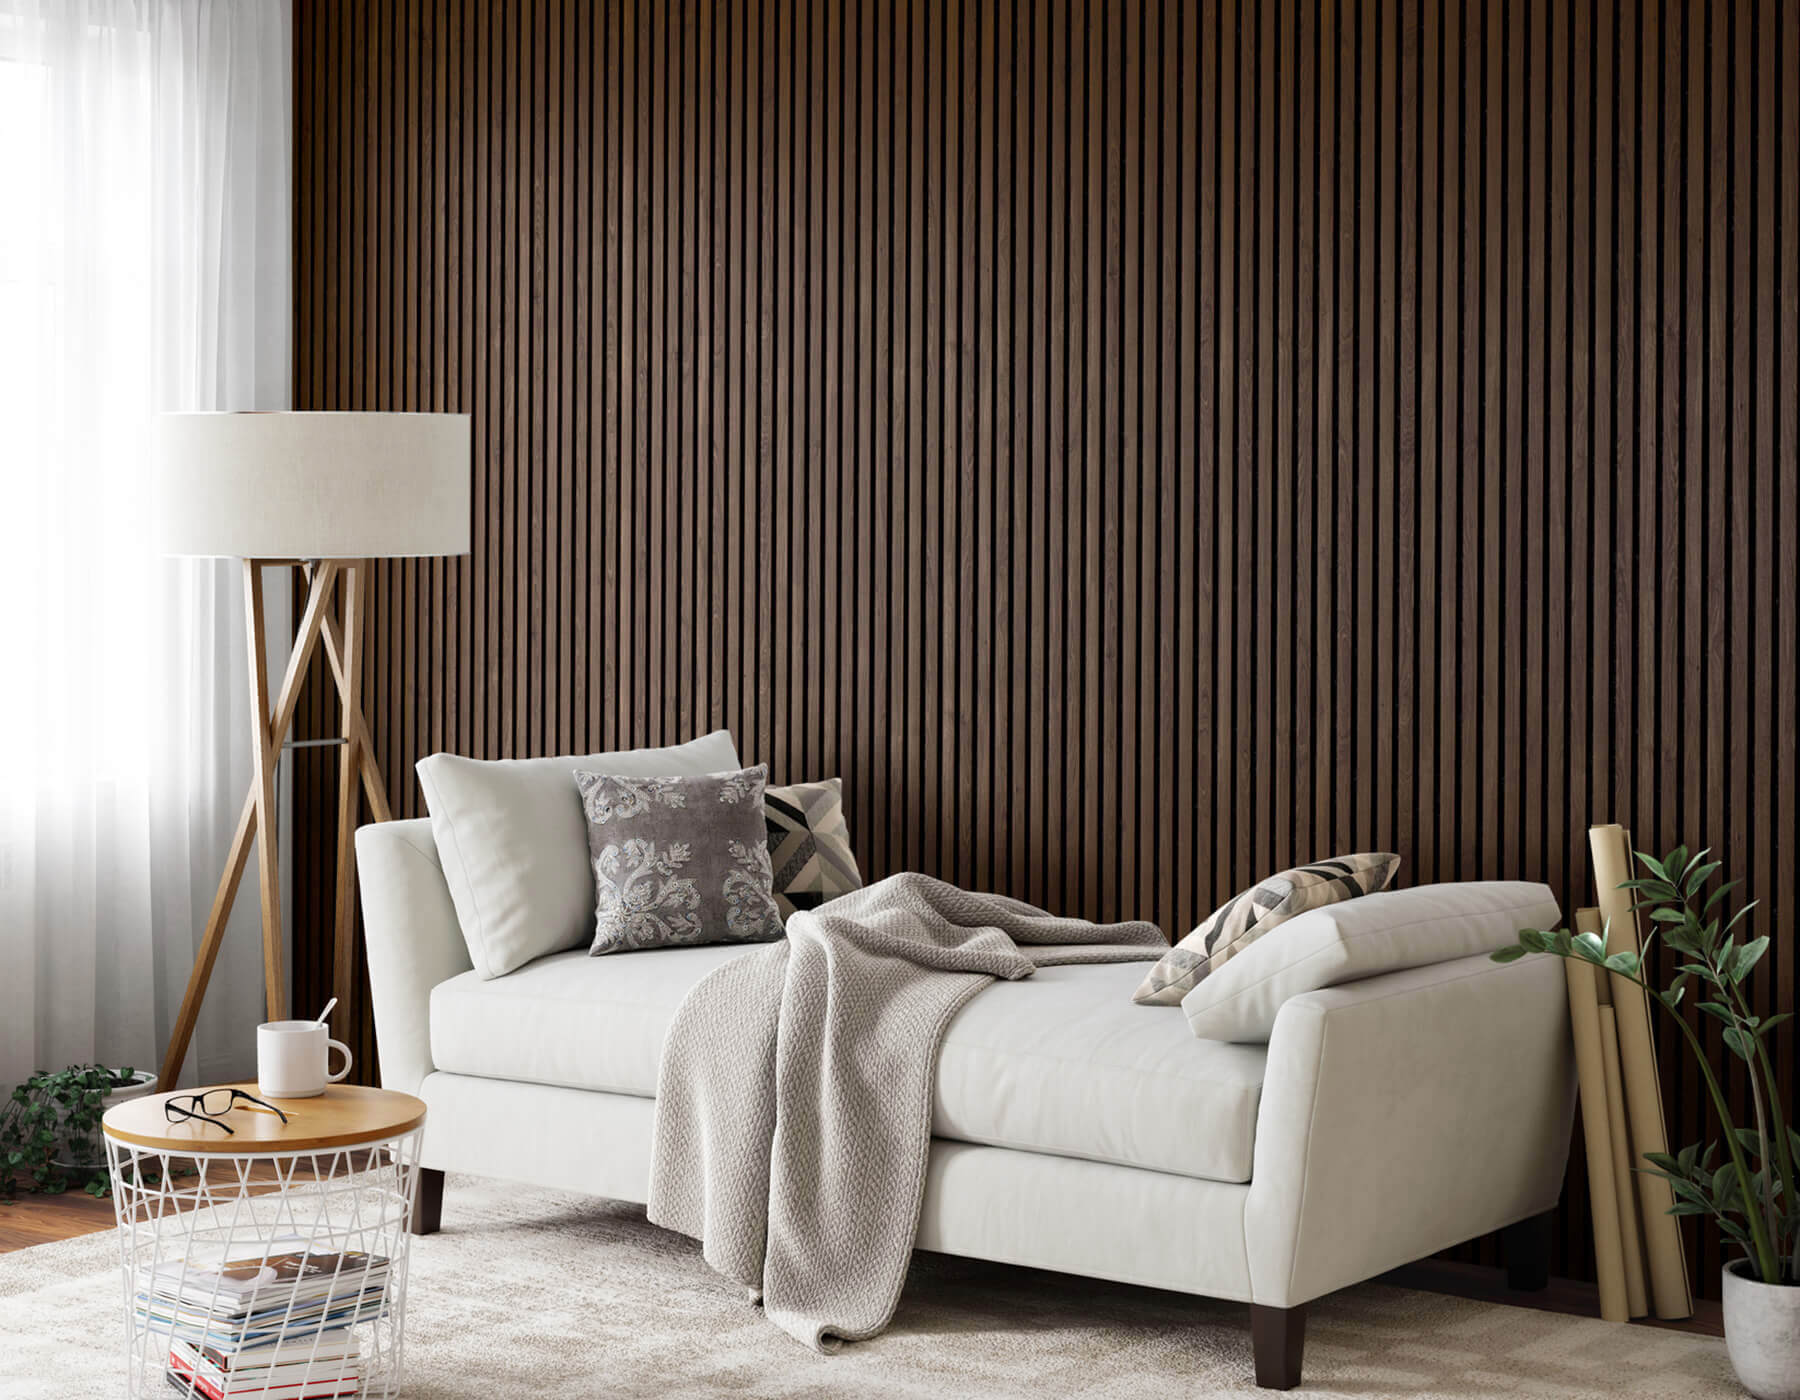 Luxury American Oak Acoustic Slat Wood Wall Panels | Original Slatpanel